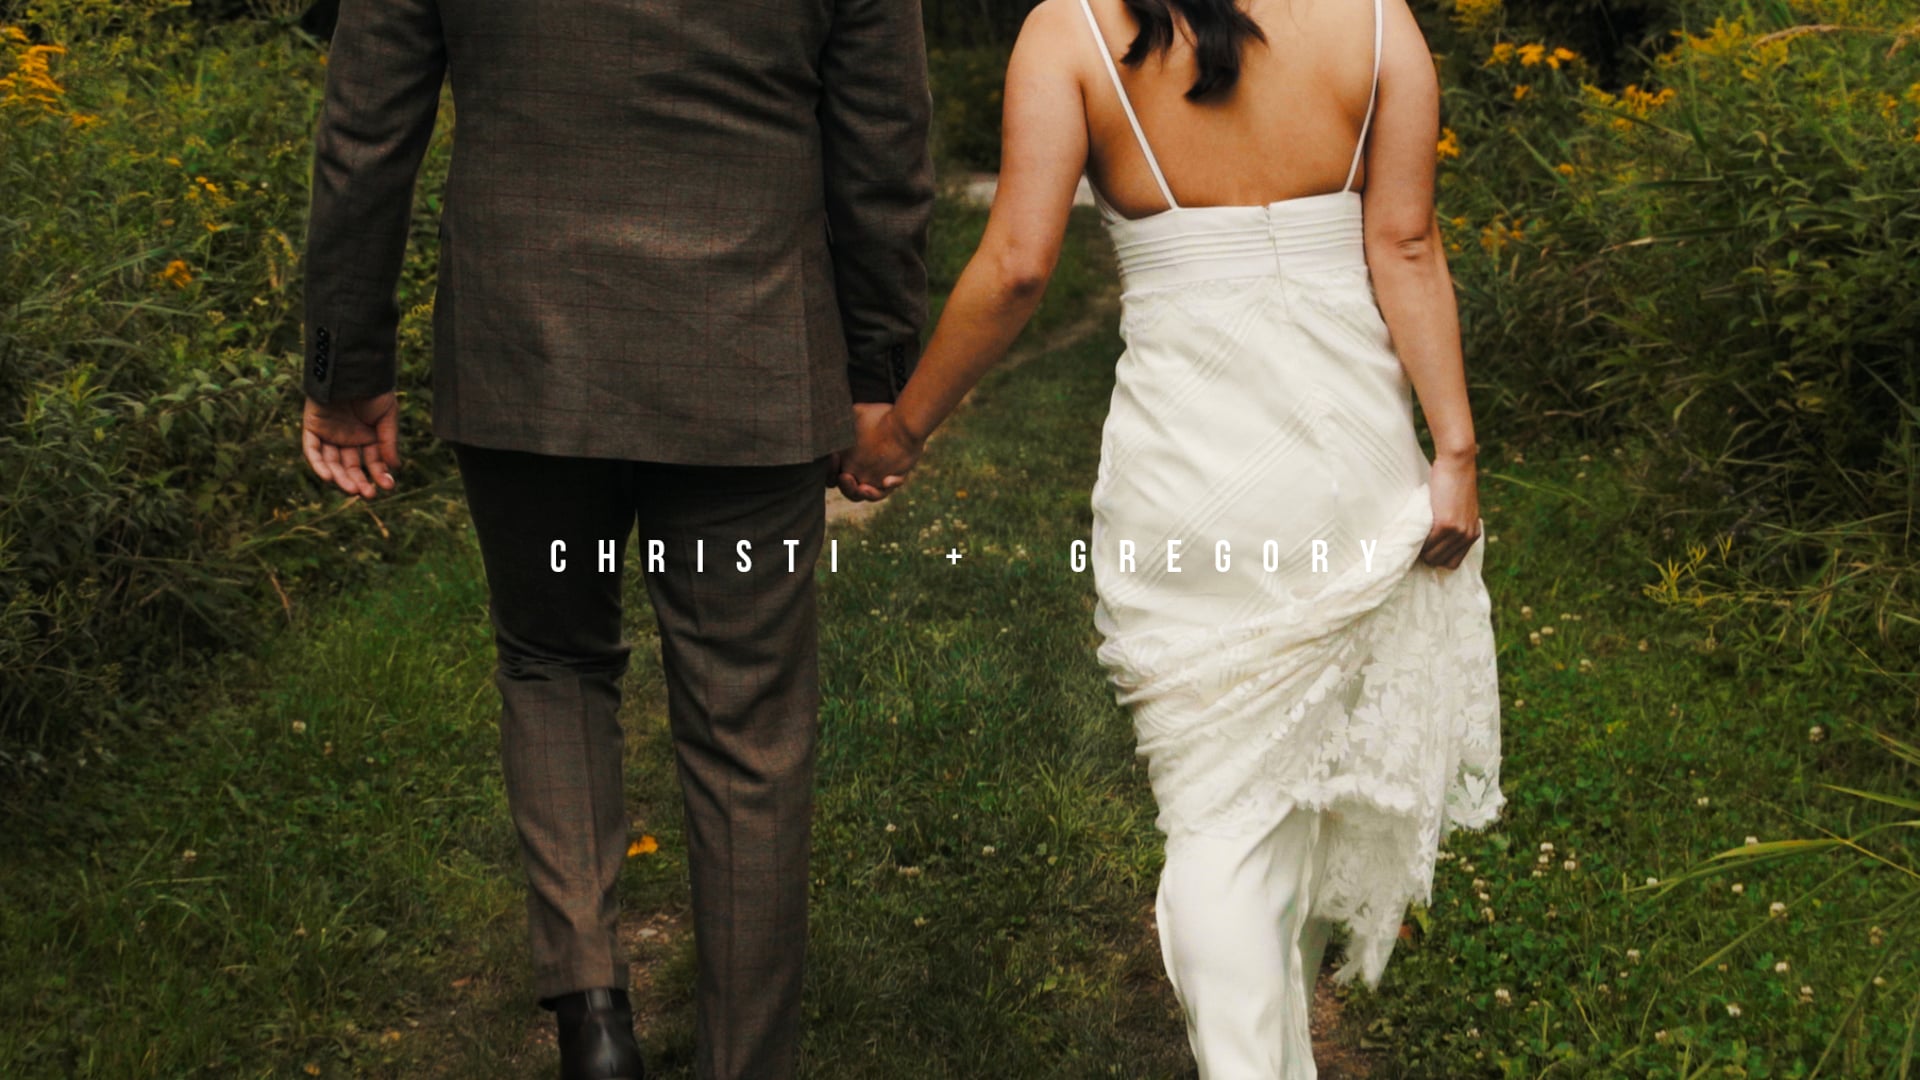 Christi & Gregory  |  The Wedding Film